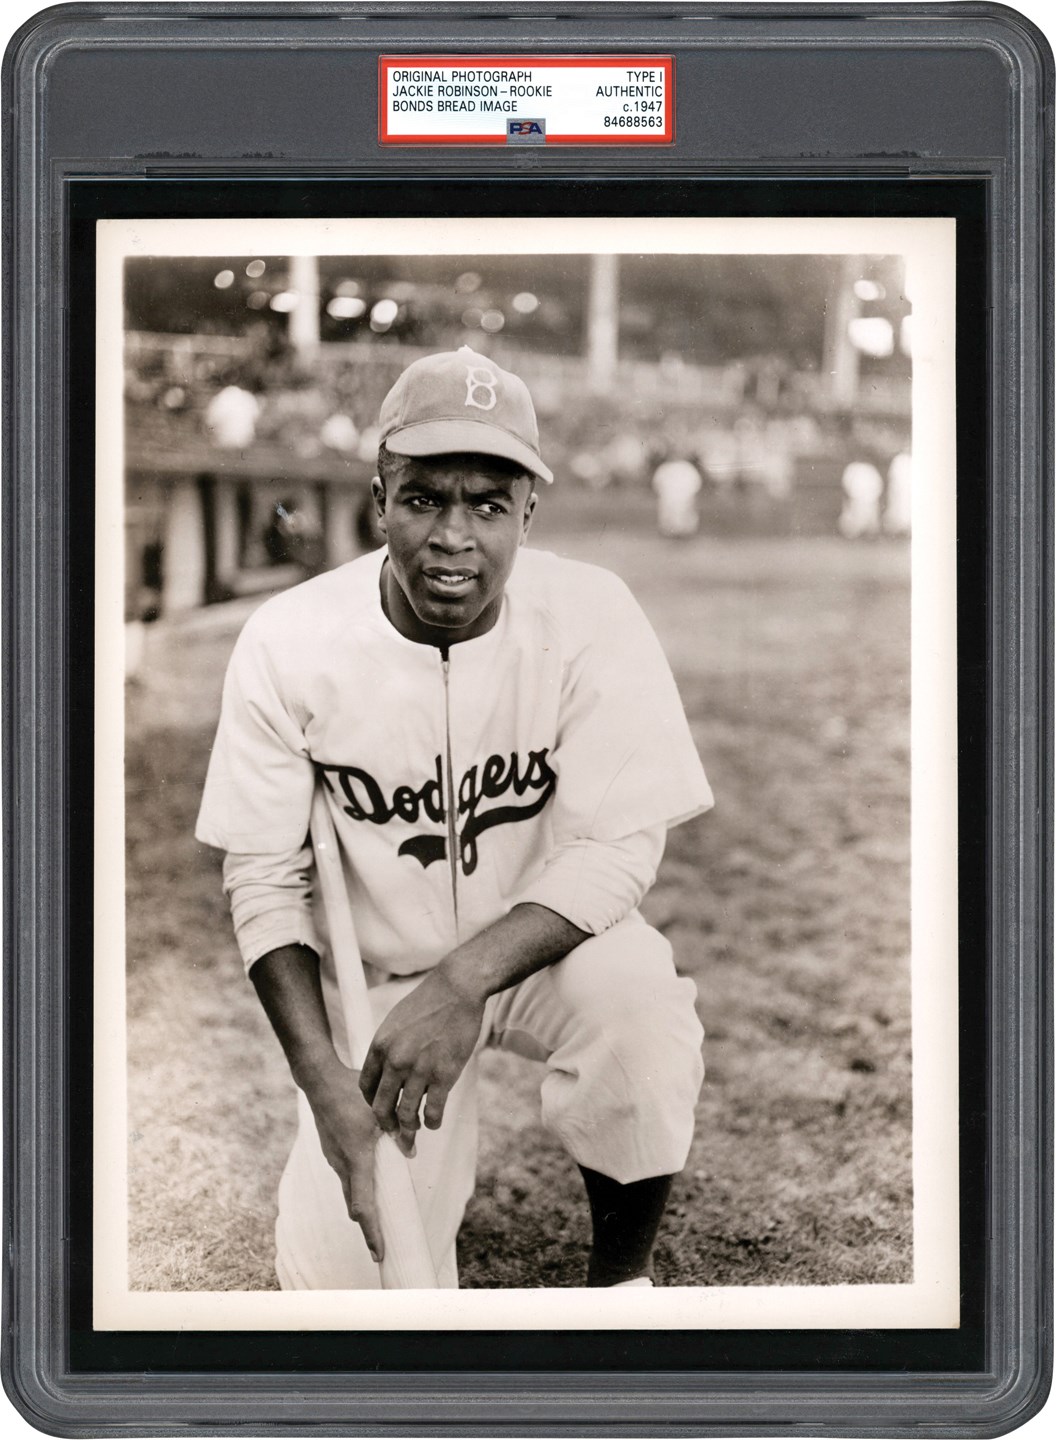 Jackie Robinson Cards: Baseball to Civil Rights